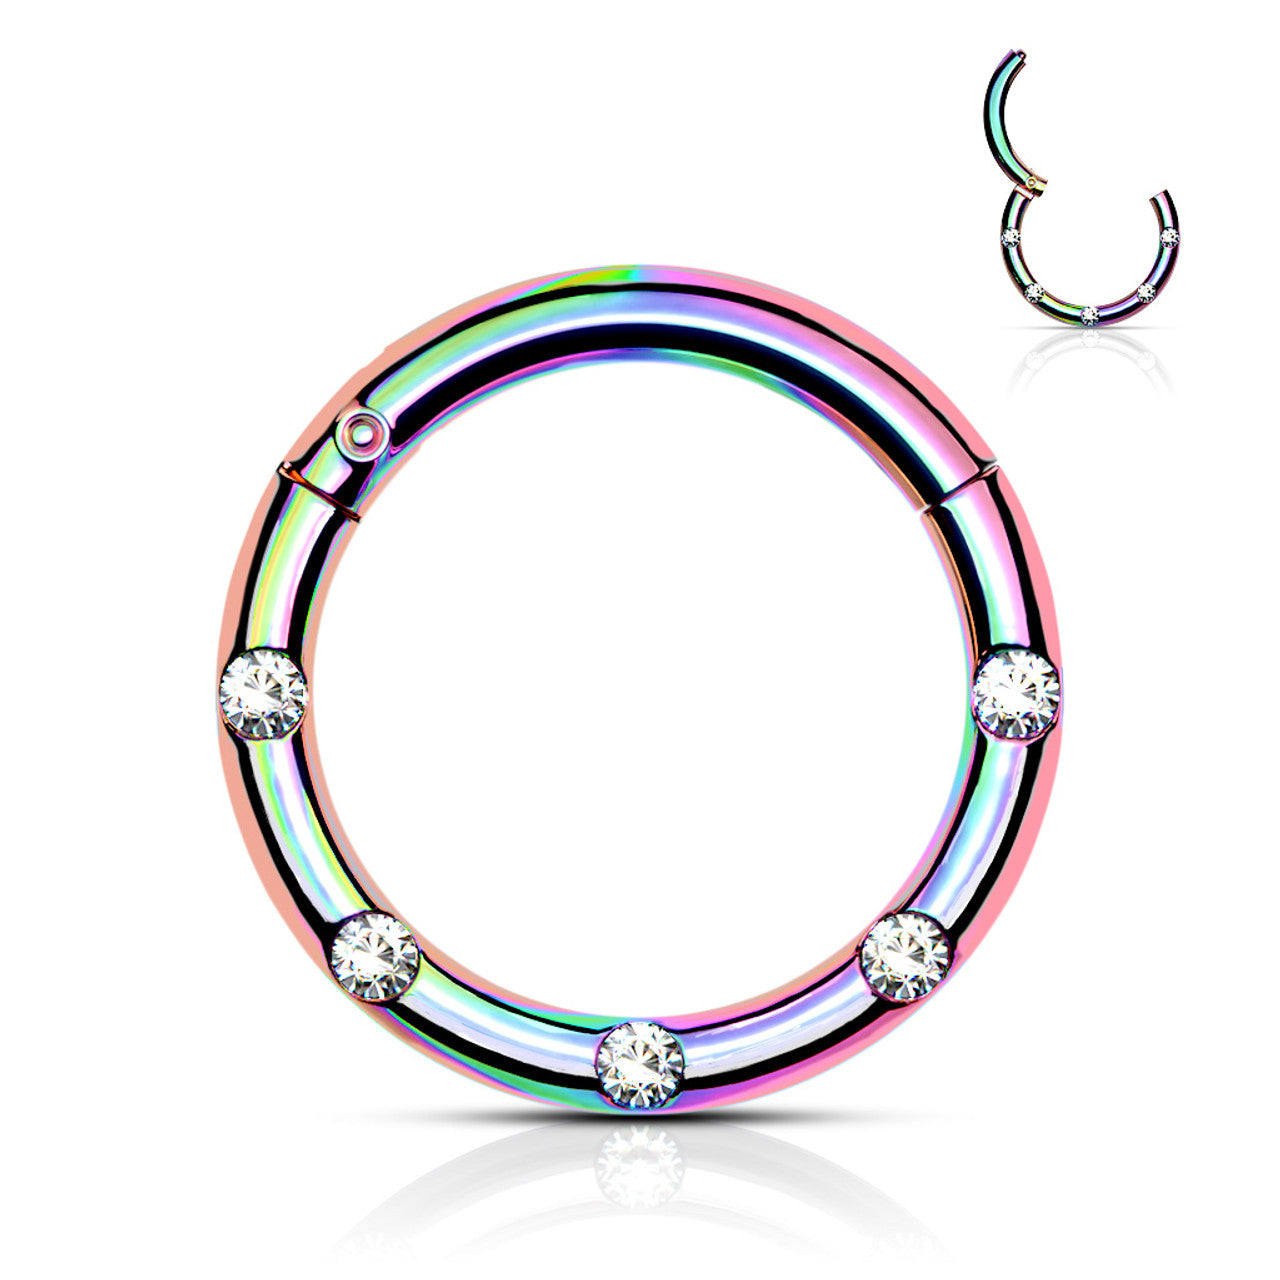 Surgical Steel Hinged Segment Hoop Ring 16 Gauge & 5 Flush Gems